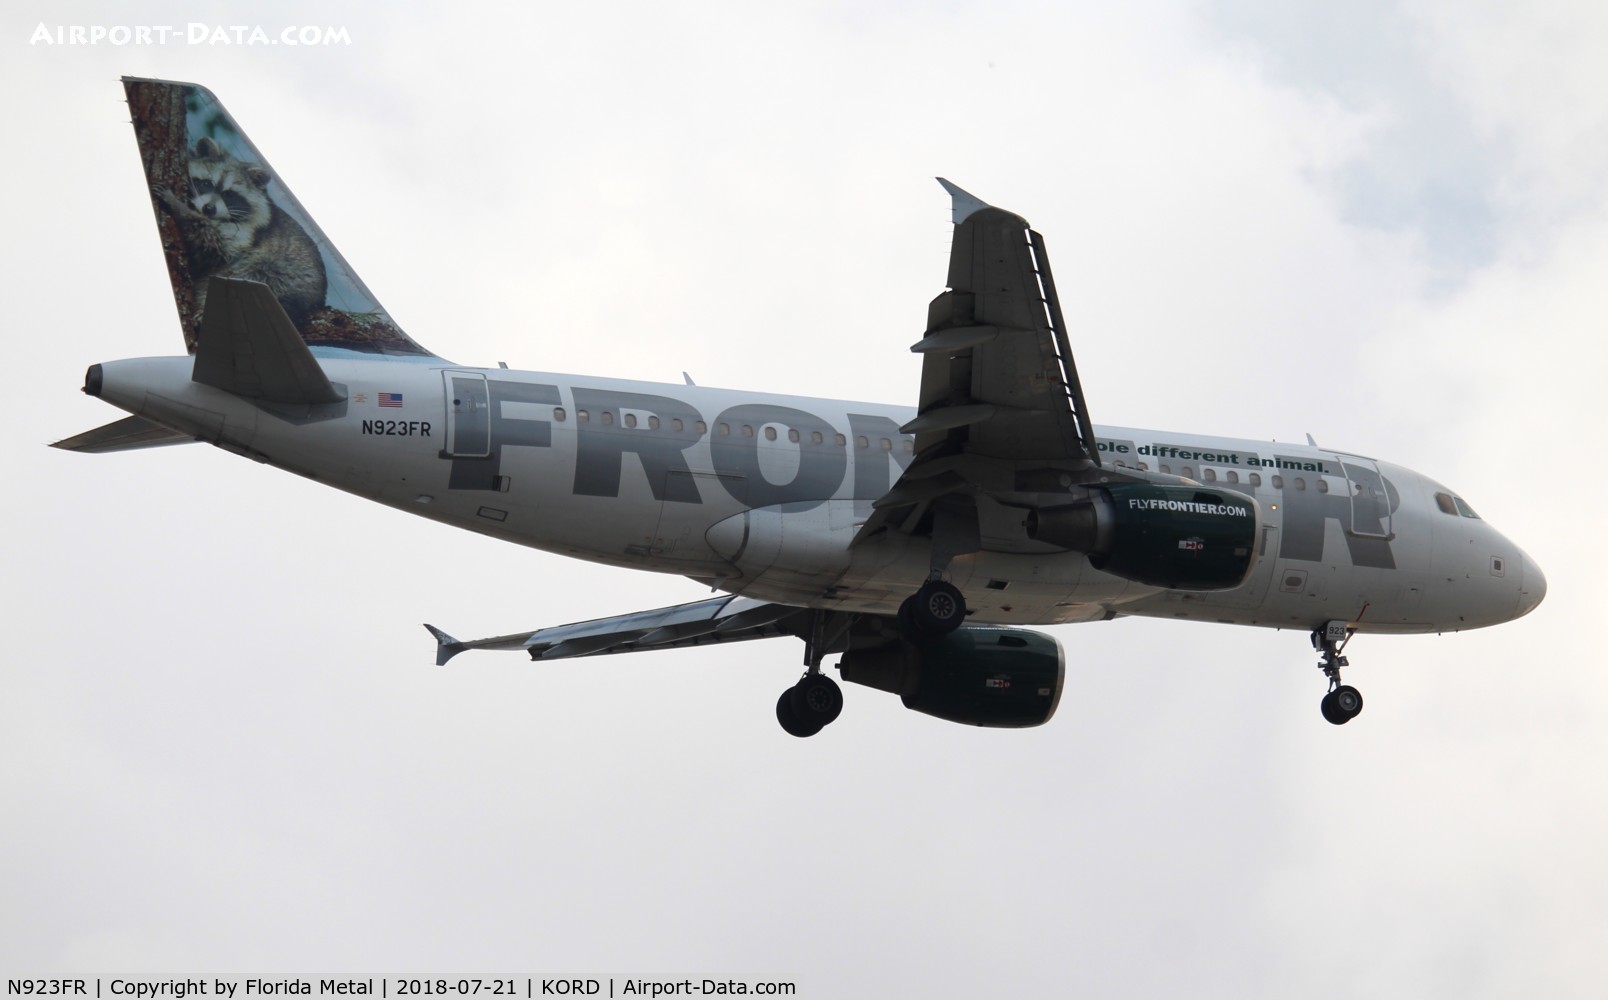 N923FR, 2003 Airbus A319-111 C/N 2019, ORD spotting 2018